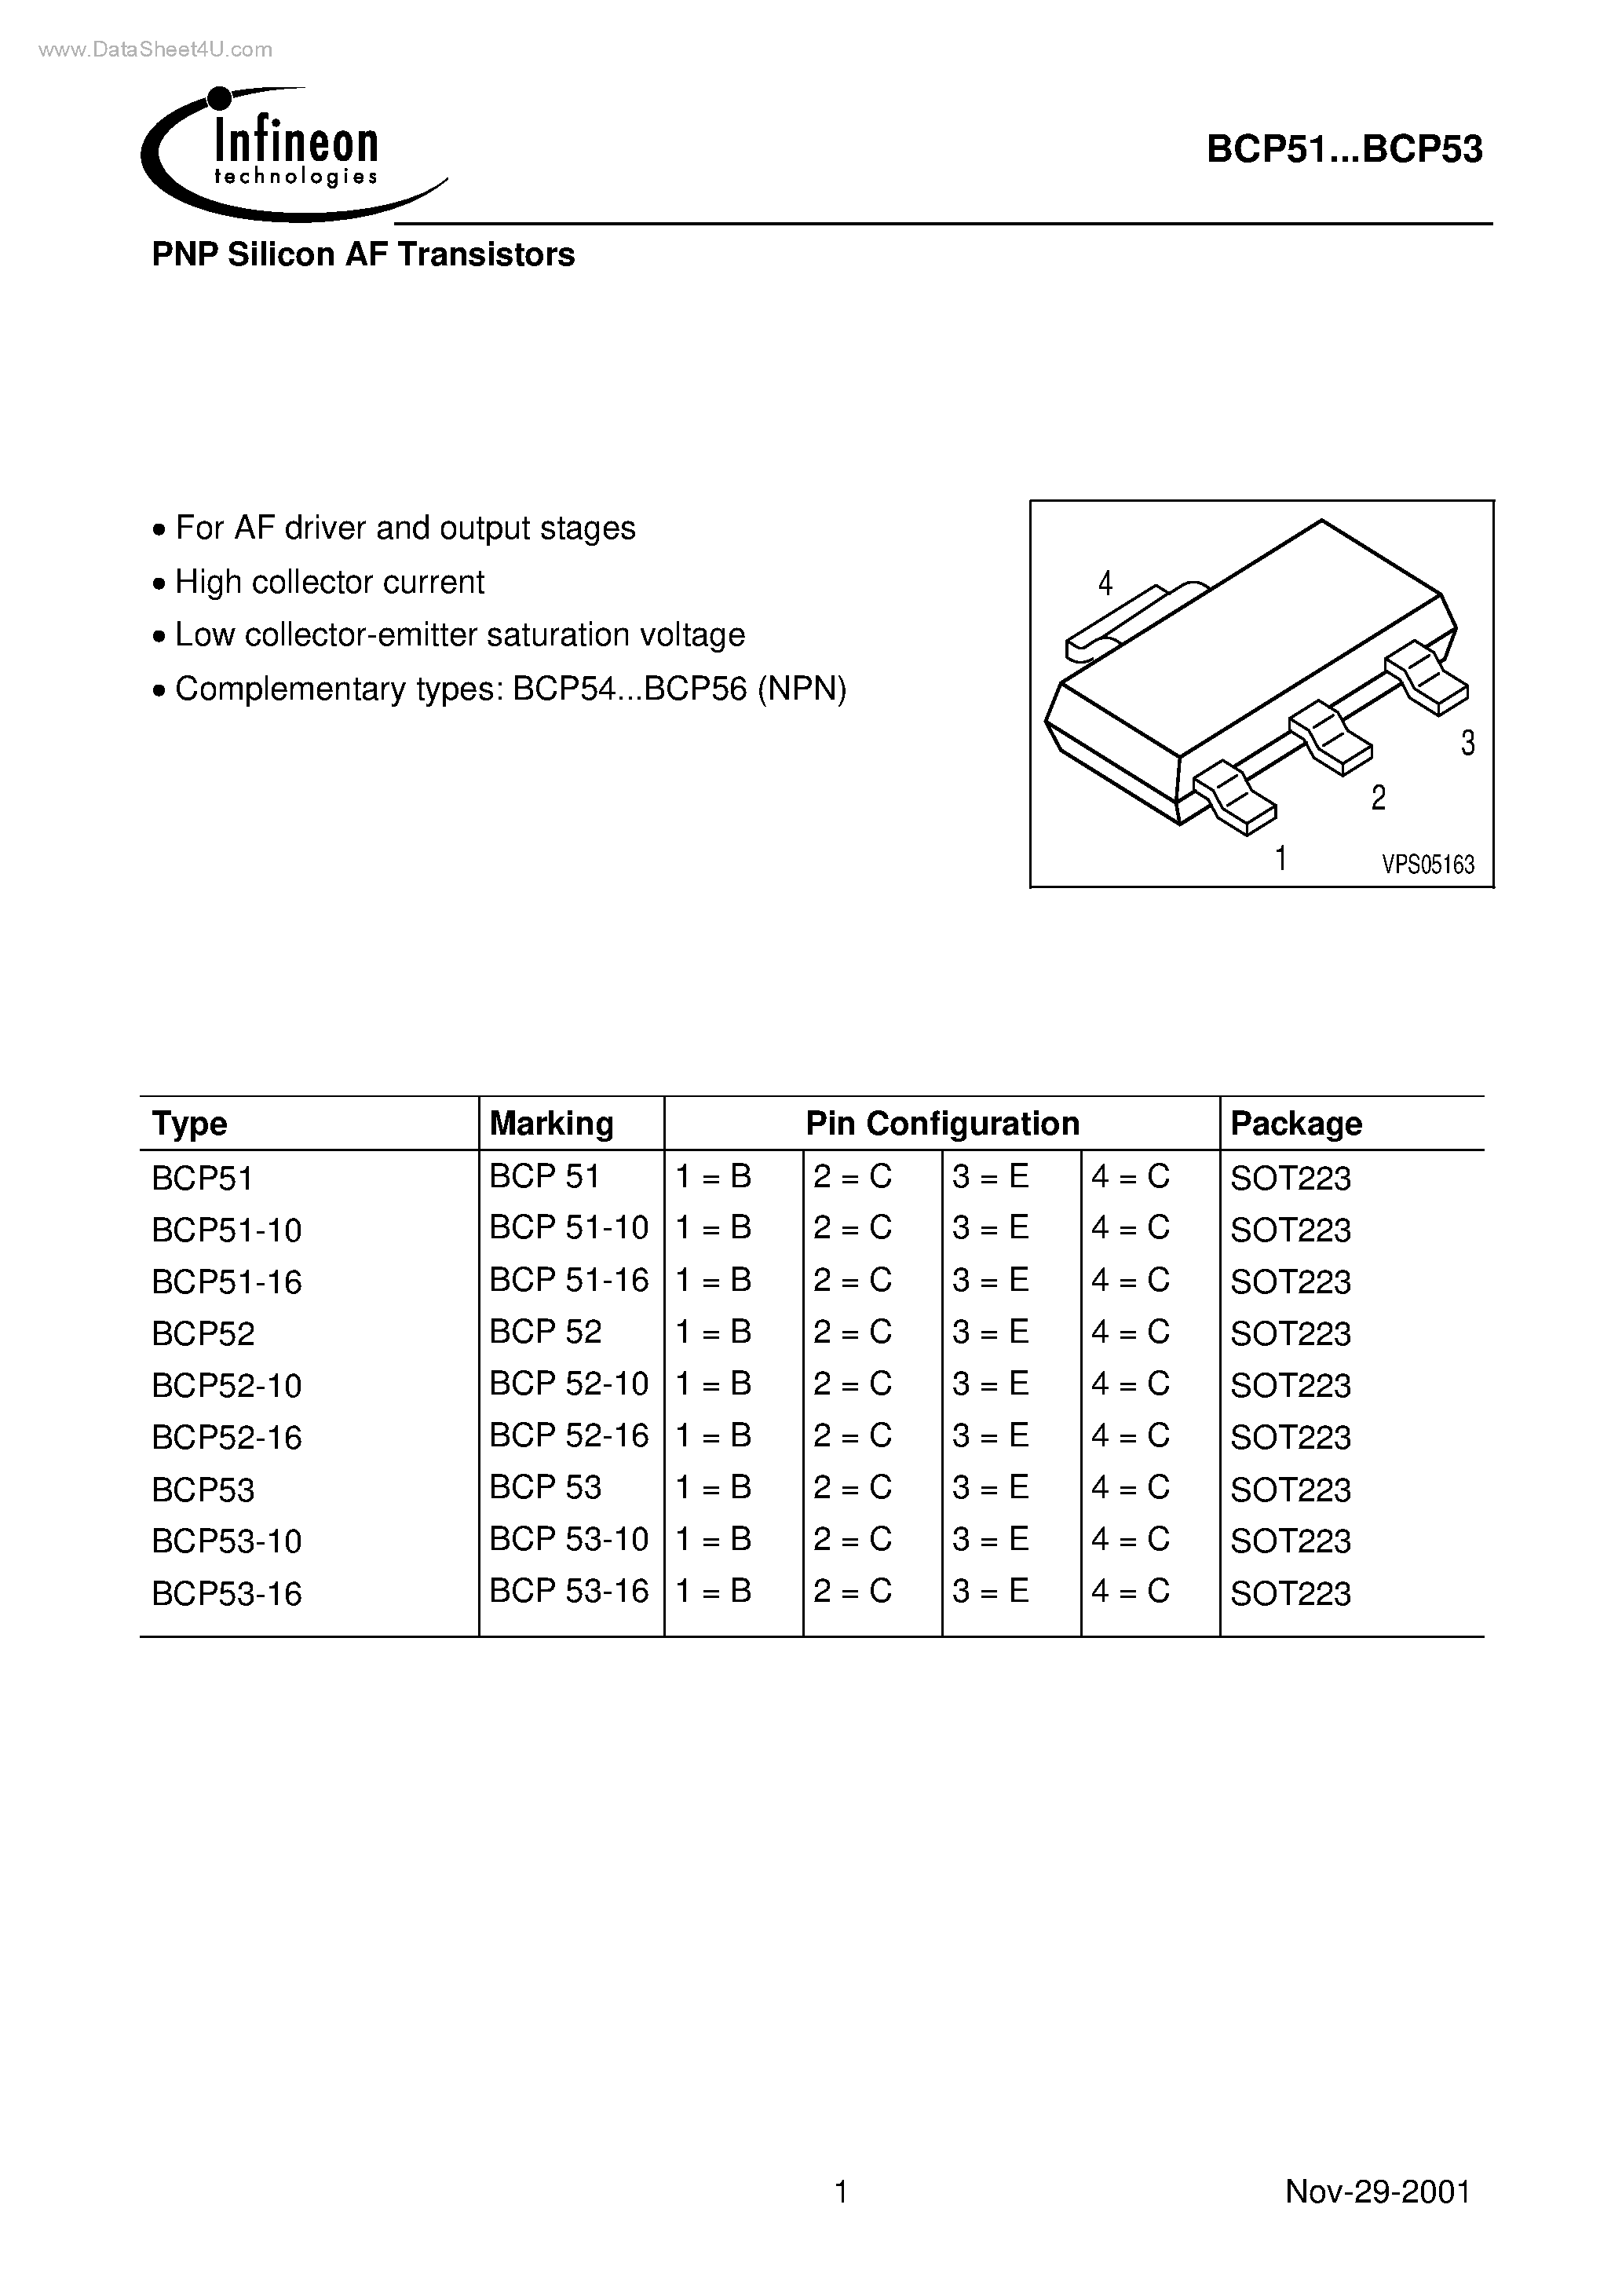 Datasheet BCP52-16 - PNP Silicon AF Transistors page 1